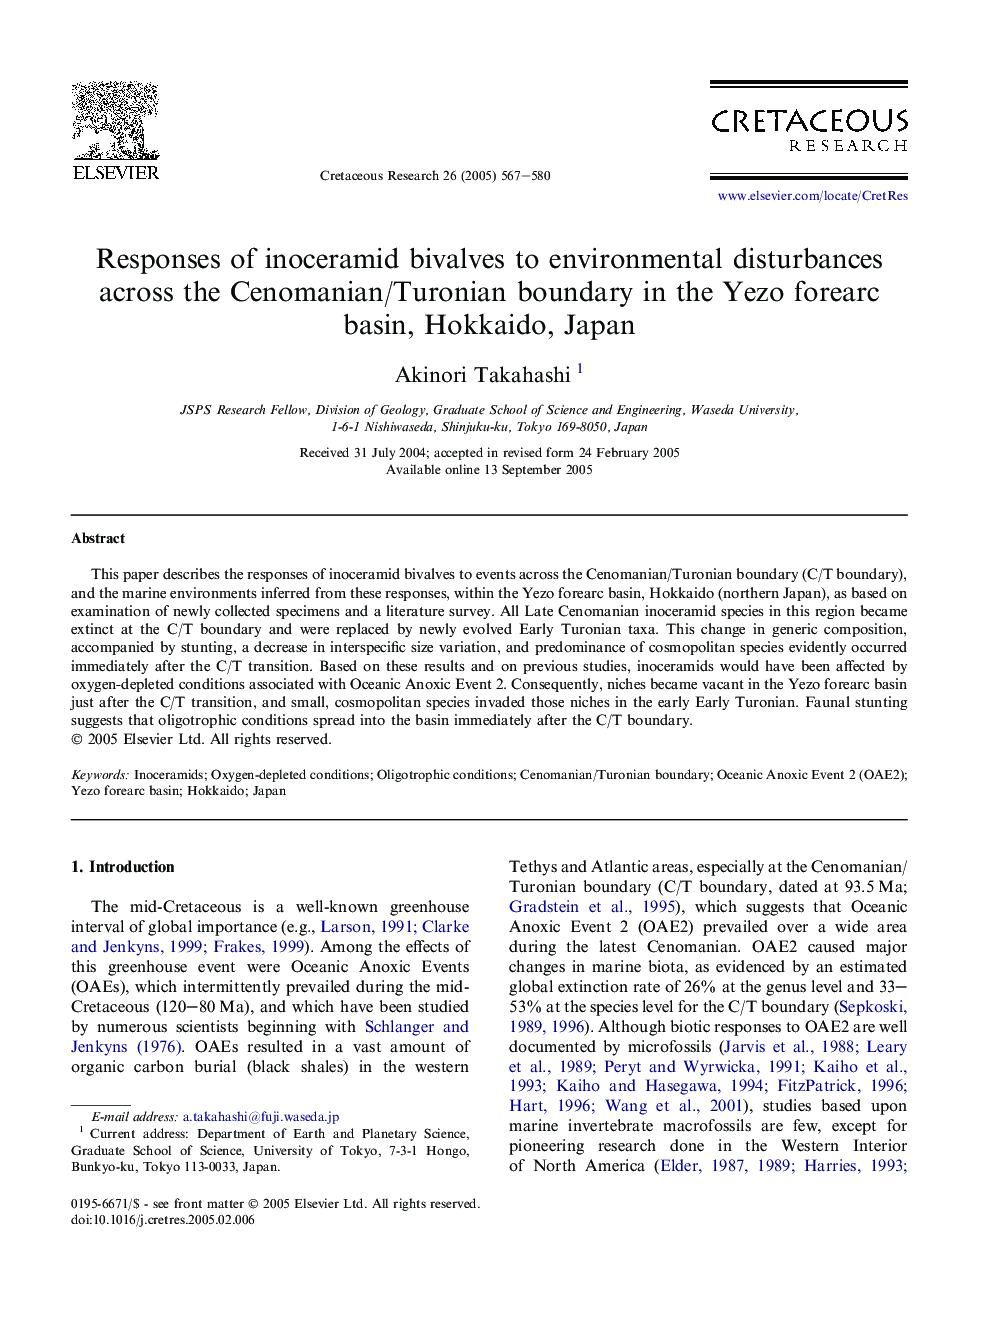 Responses of inoceramid bivalves to environmental disturbances across the Cenomanian/Turonian boundary in the Yezo forearc basin, Hokkaido, Japan